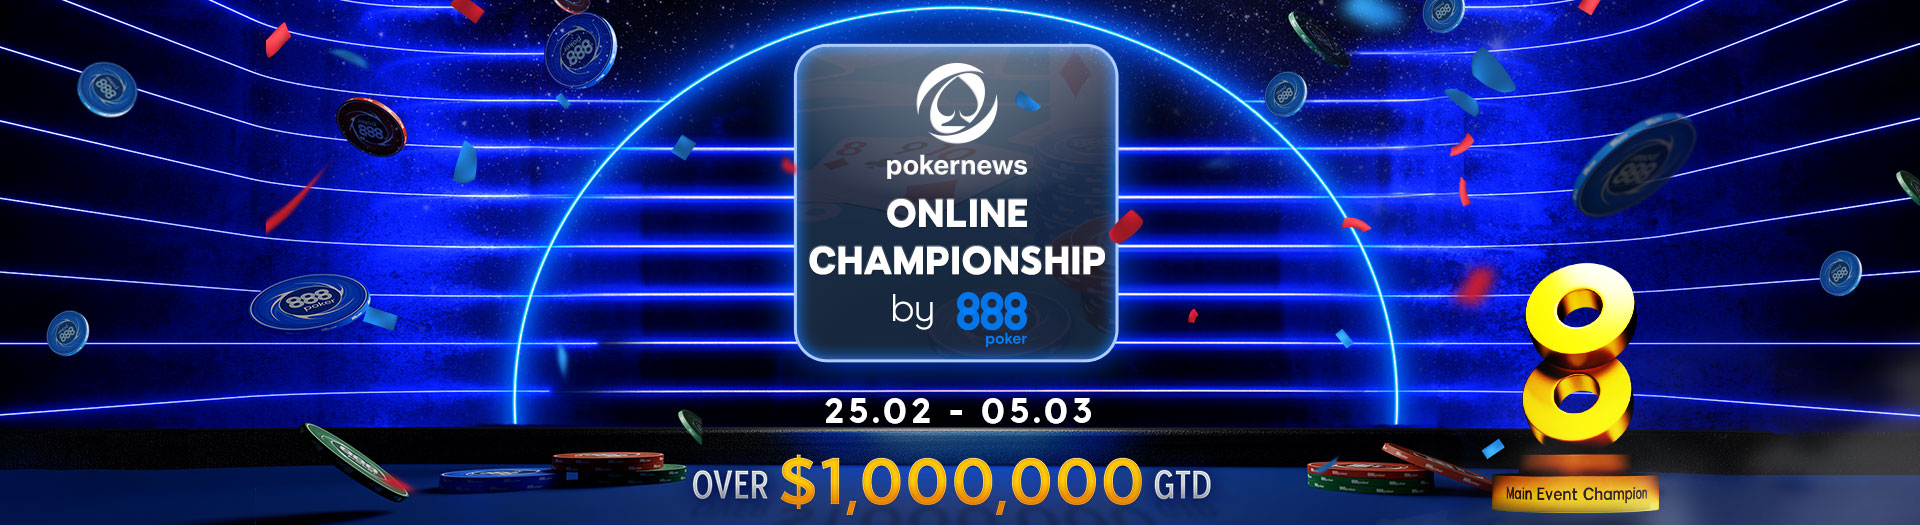 Pokernews Online Championship